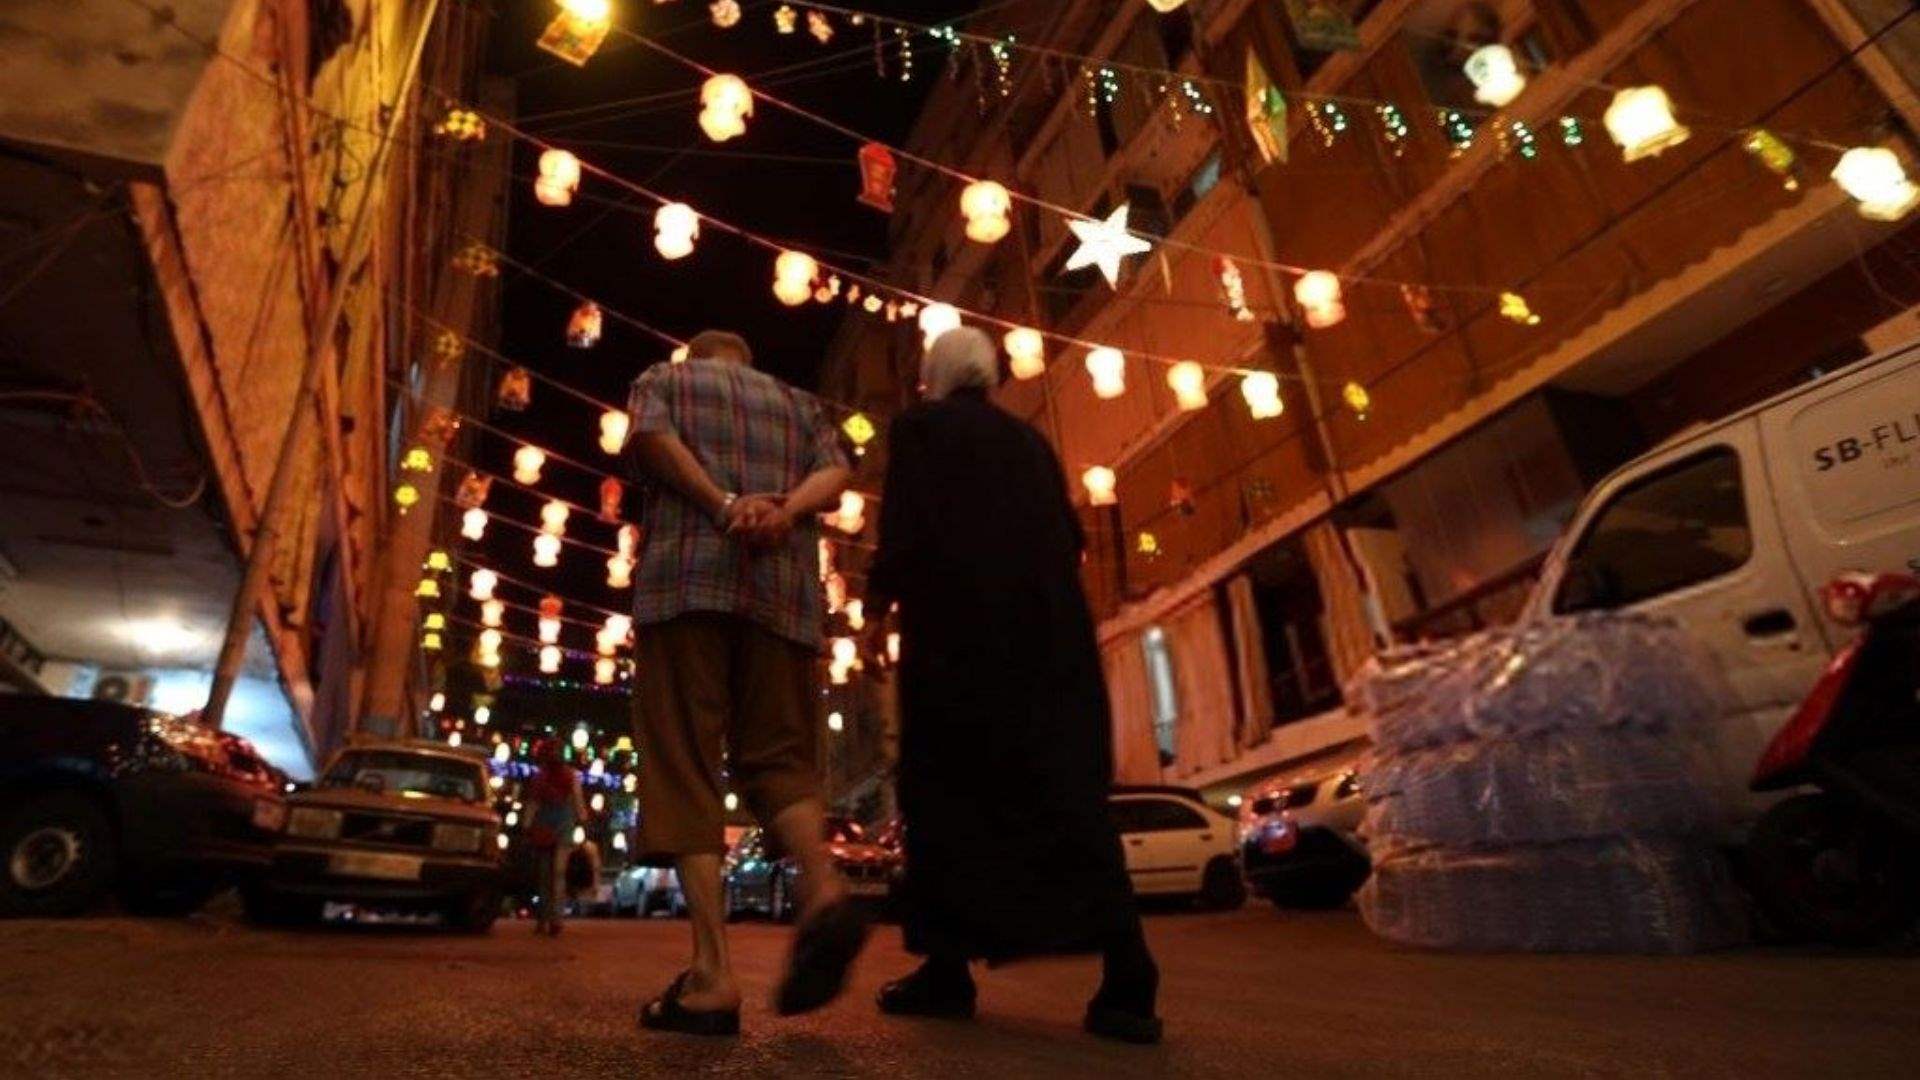 Lebanon sees no festive spirit amid crisis: report